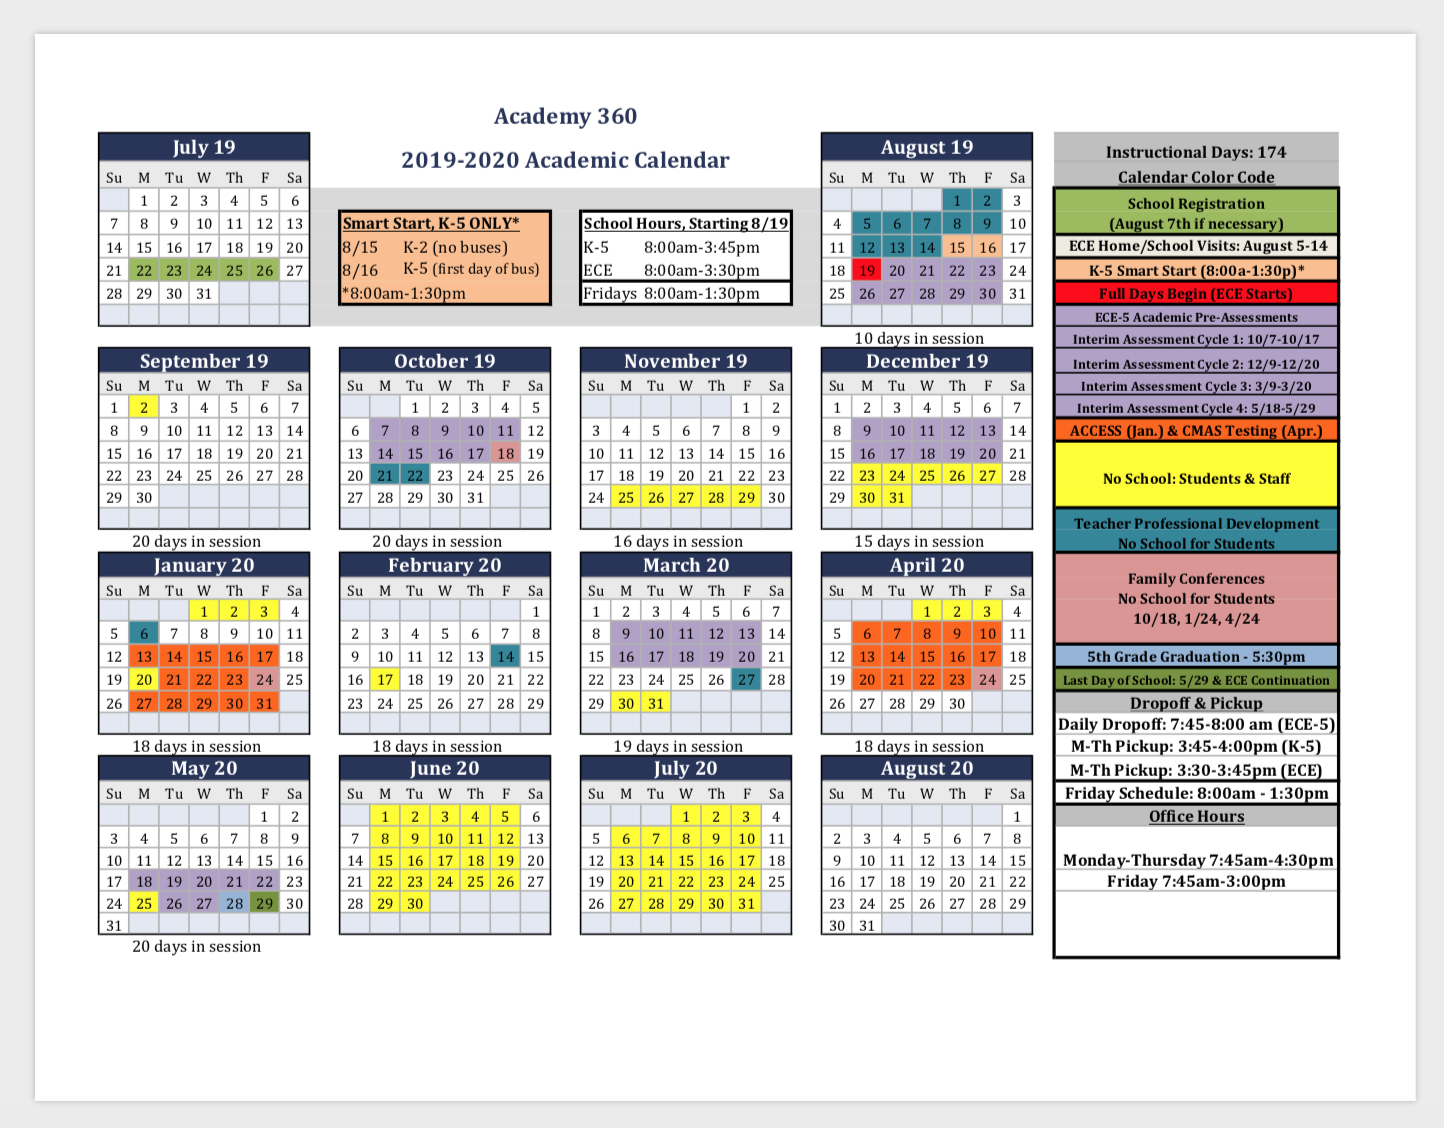 Calendar With Special Days 2020 | Calendar Template